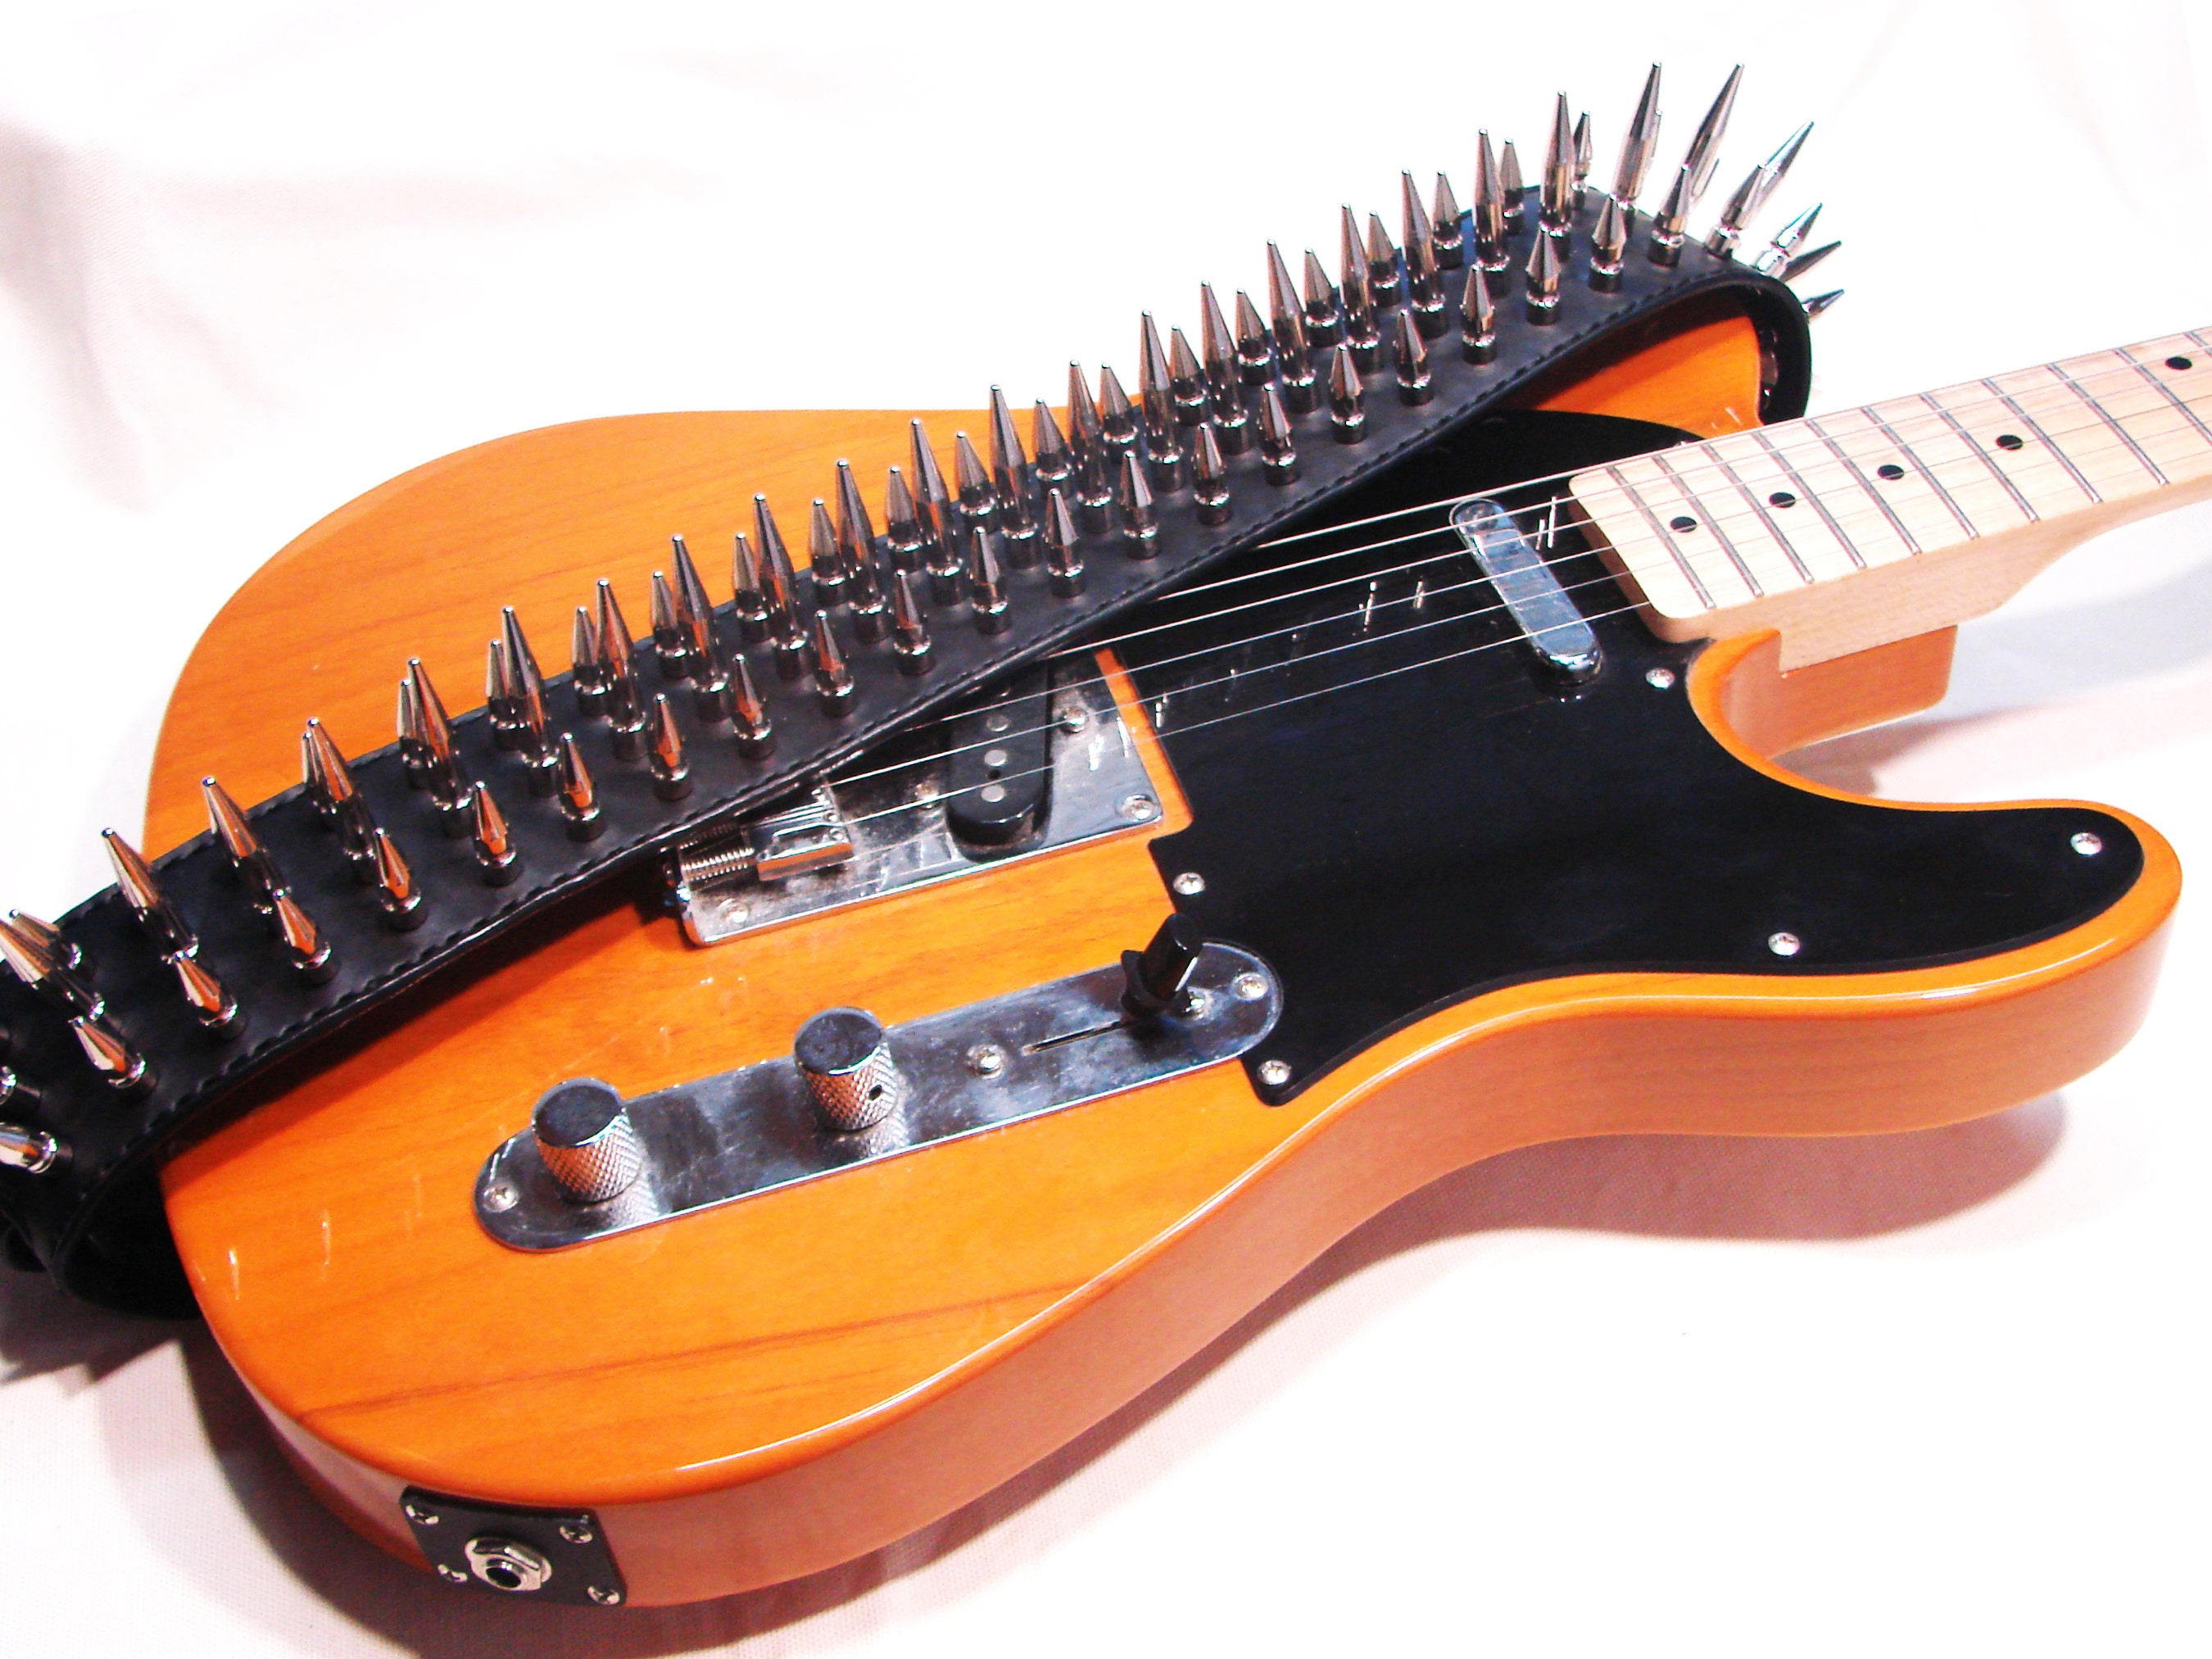 FLEOR Sangle de guitare basse en polyester réglable 5 * 160cm | iknmusic